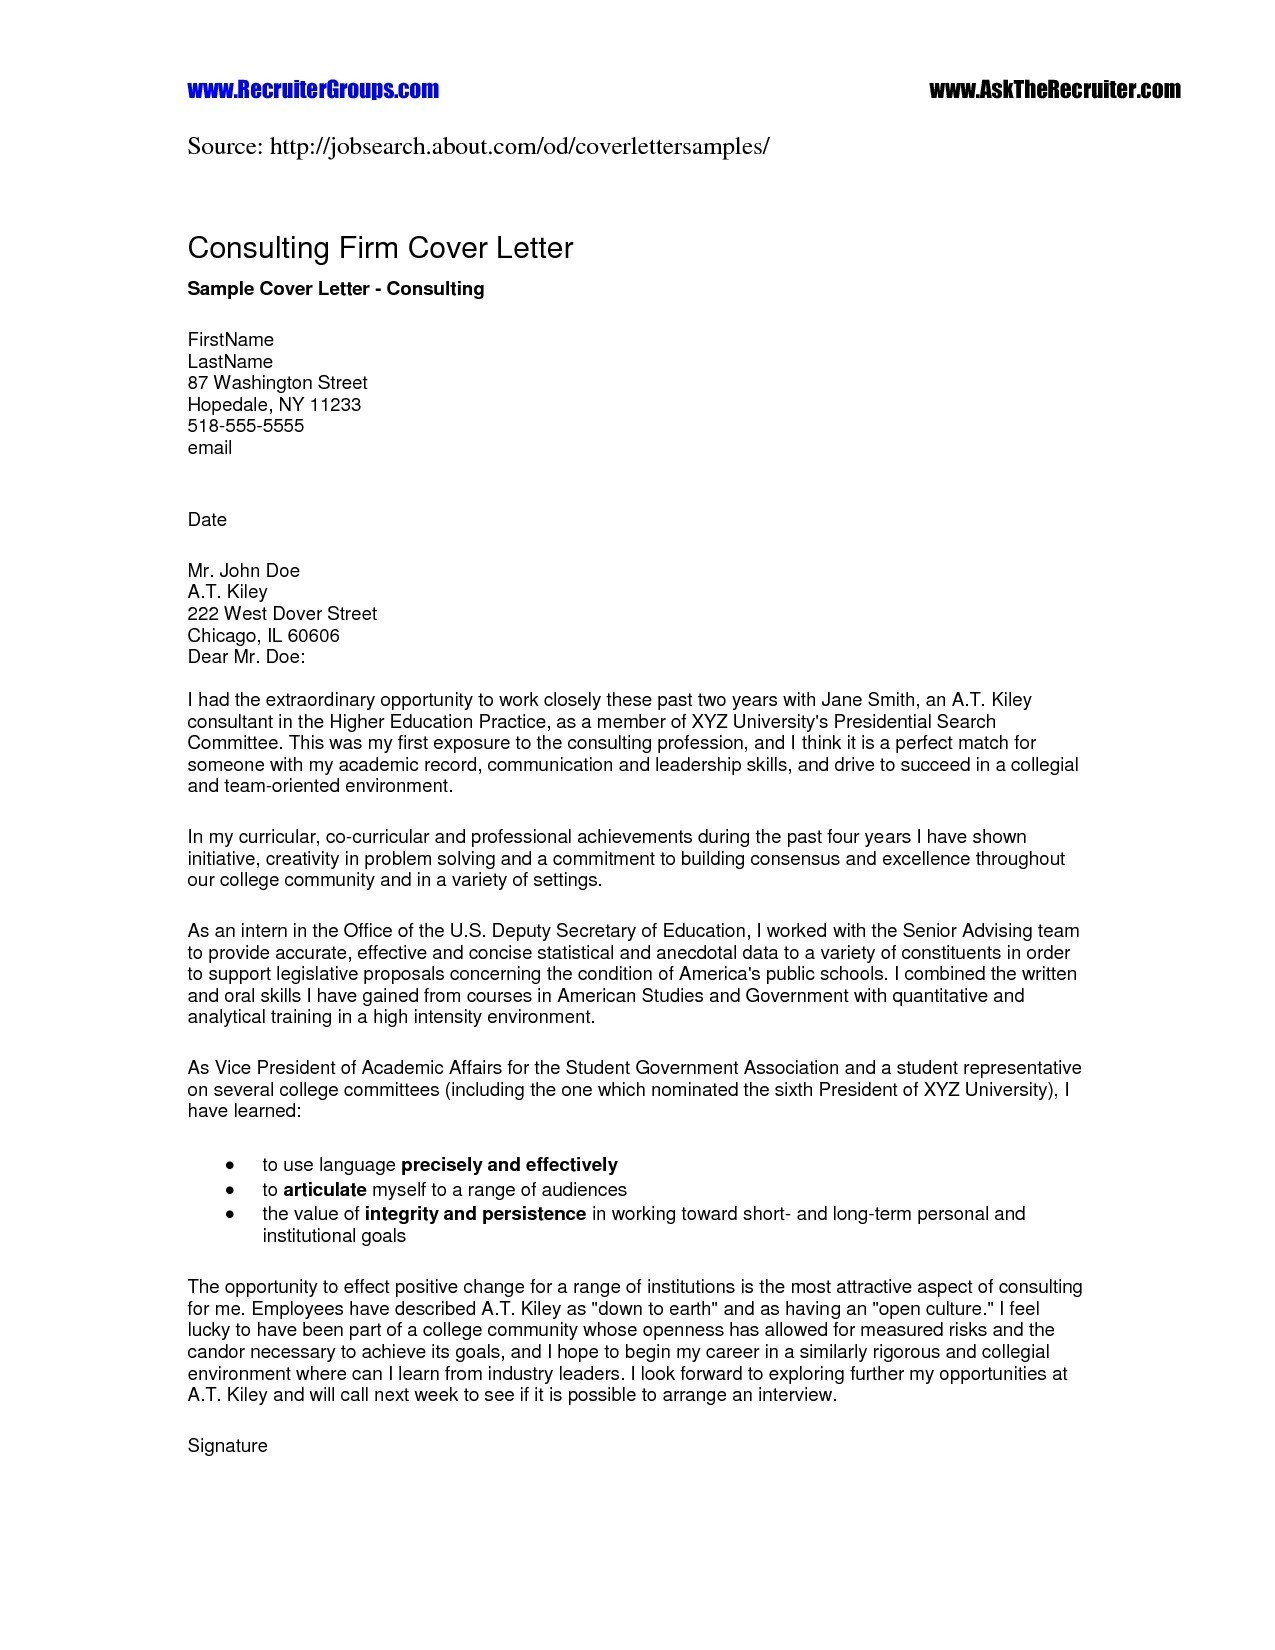 Construction Cover Letter Template - Job Application Letter format Template Copy Cover Letter Template Hr